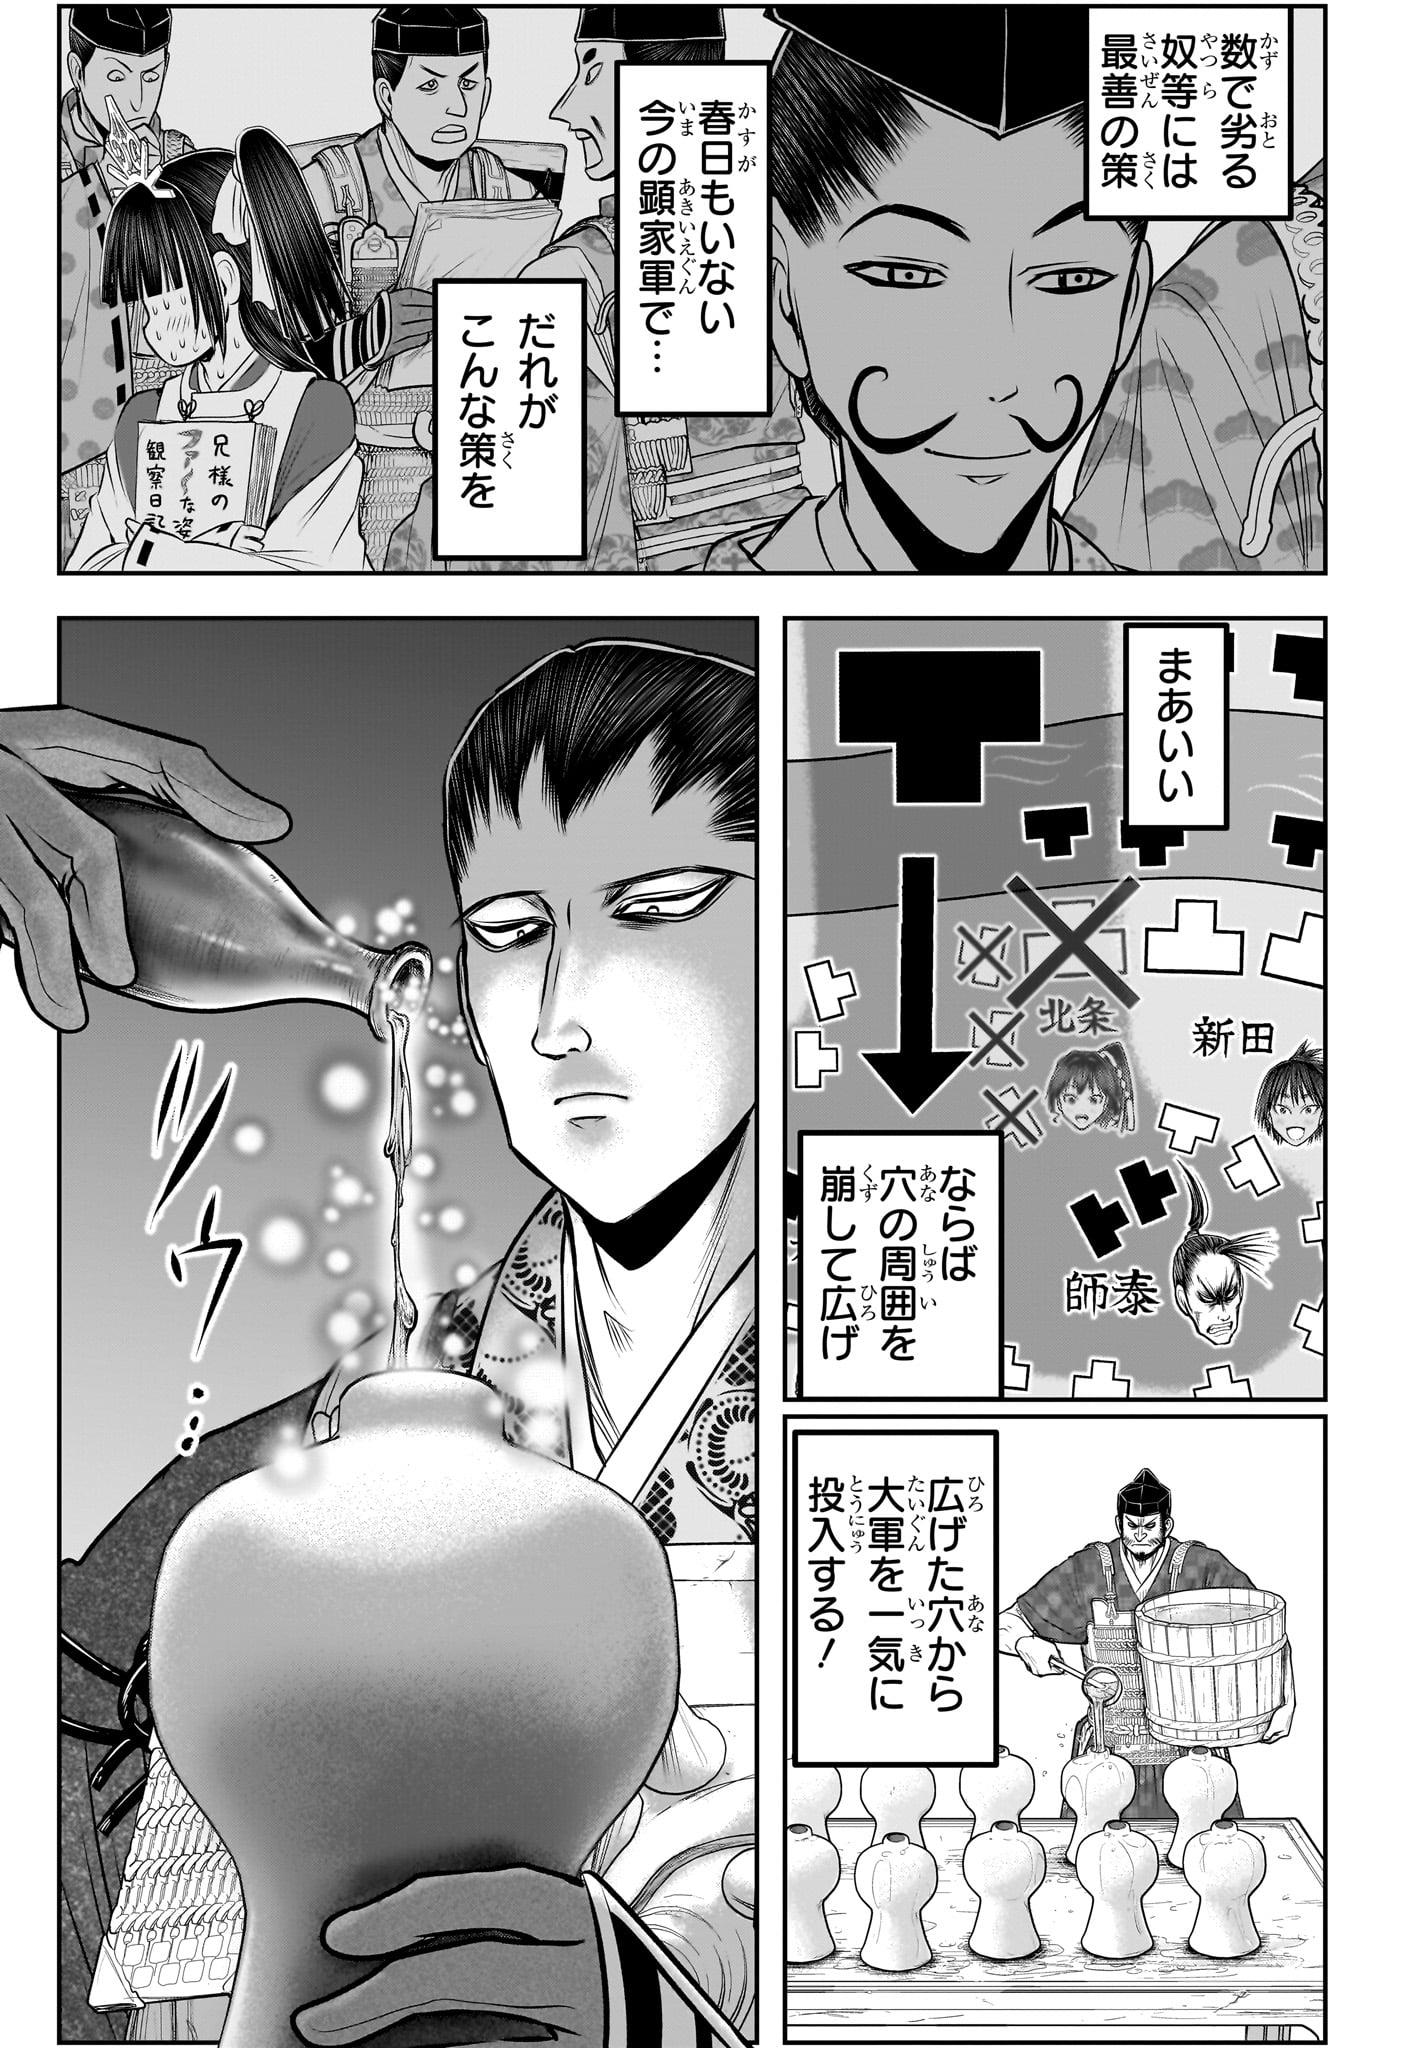 Nige Jouzu no Wakagimi - Chapter 159 - Page 11